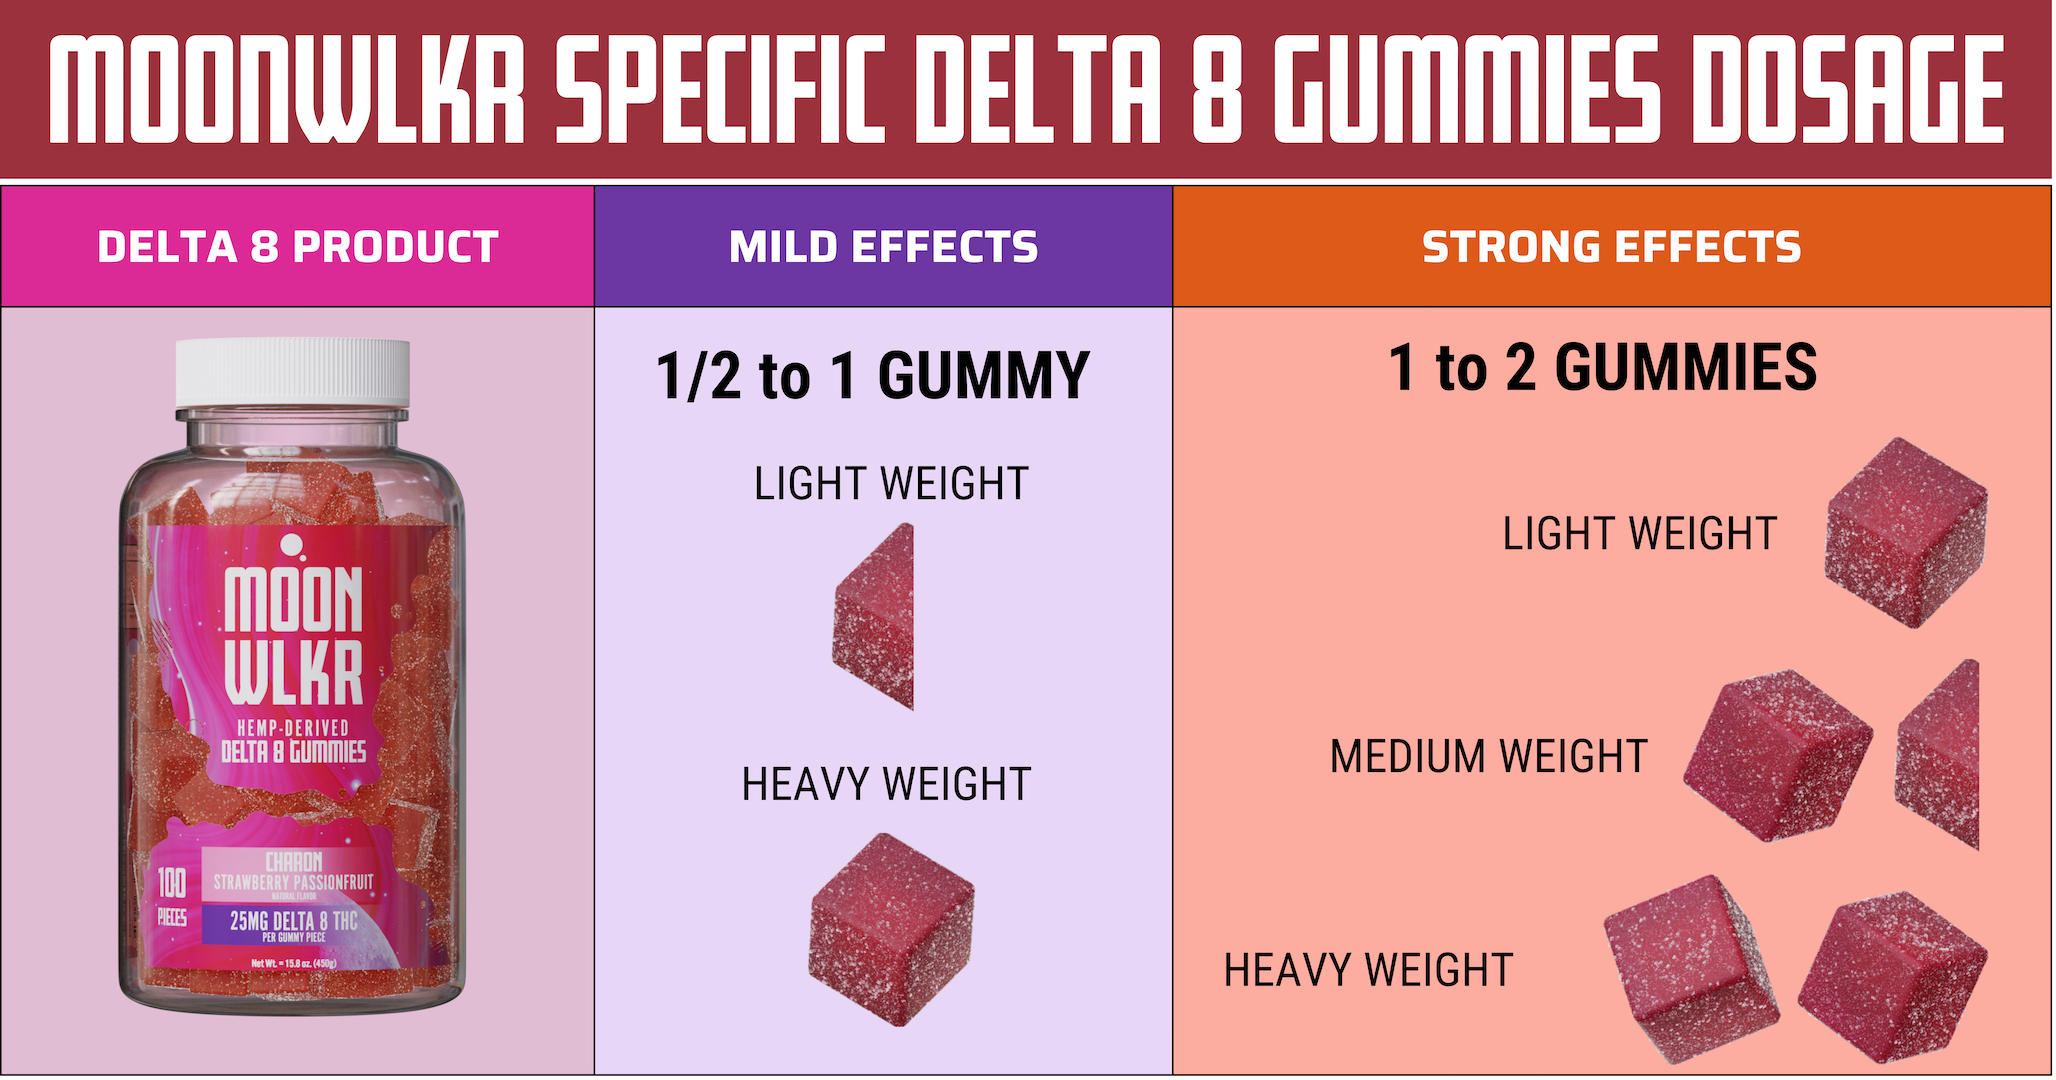 Moonwlkr Specific Delta 8 Gummy Dosage